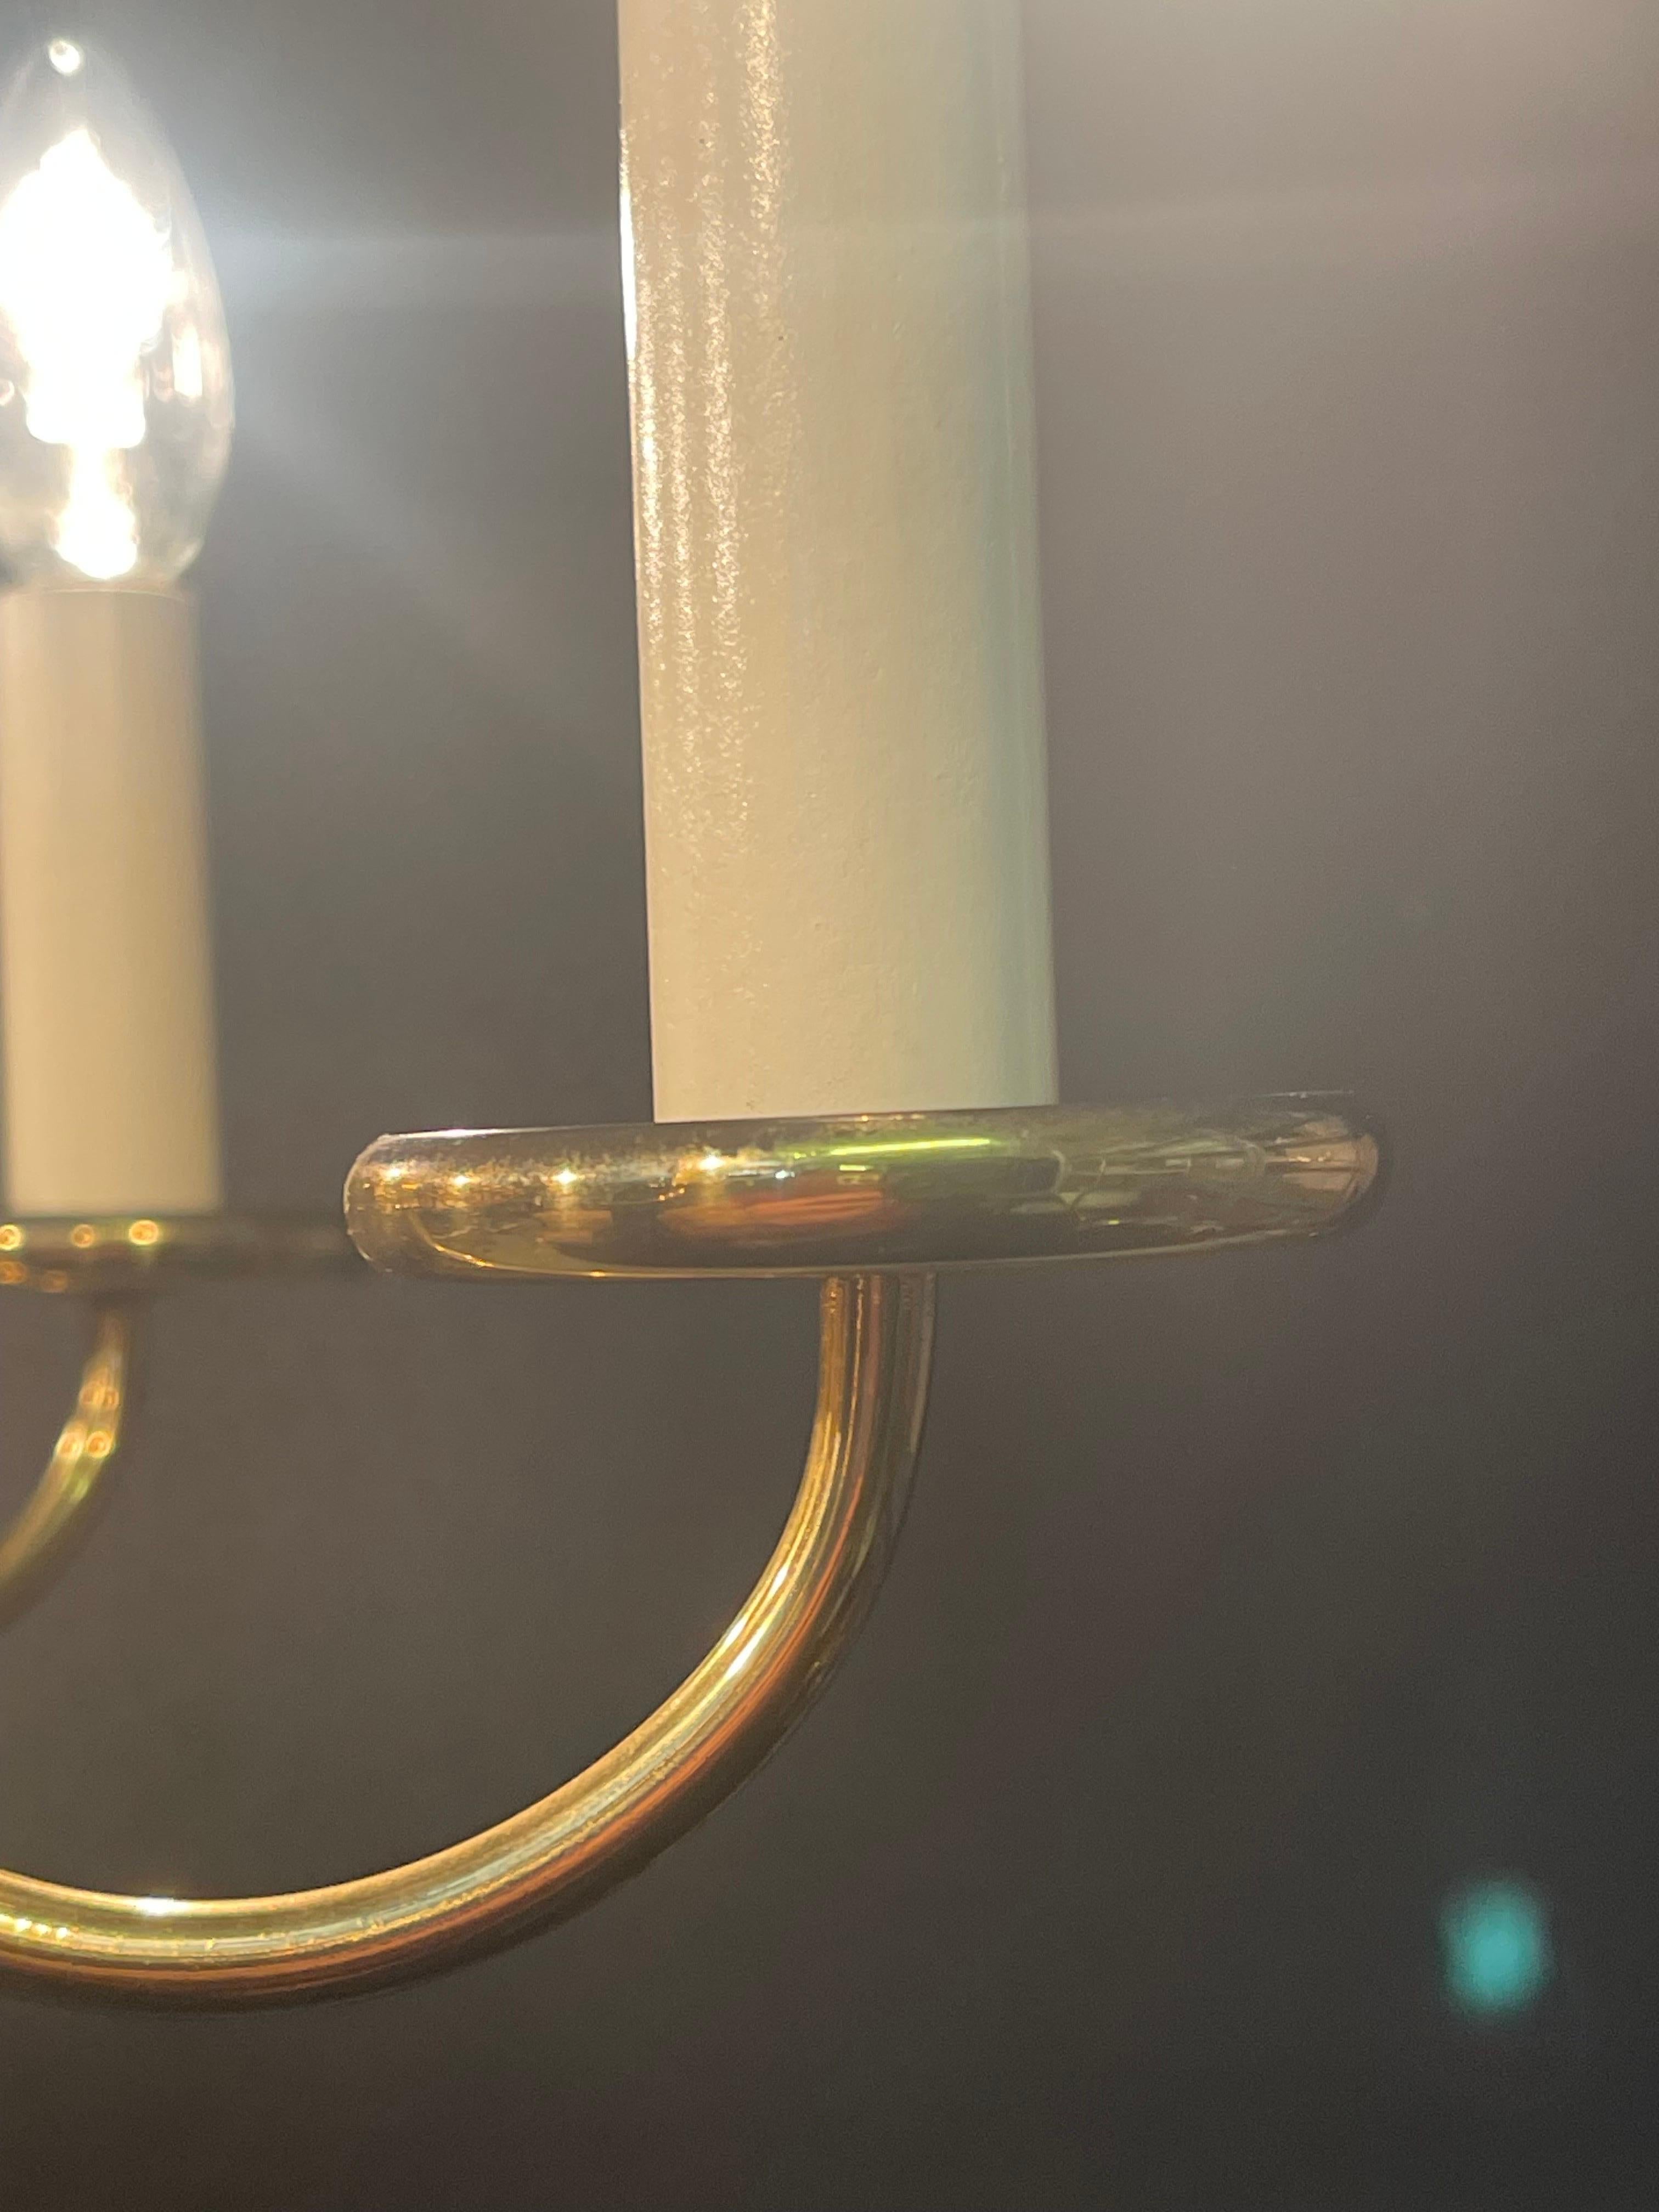  Delicate Polished Brass Chandelier by Josef Frank, 1950s (restored) For Sale 1